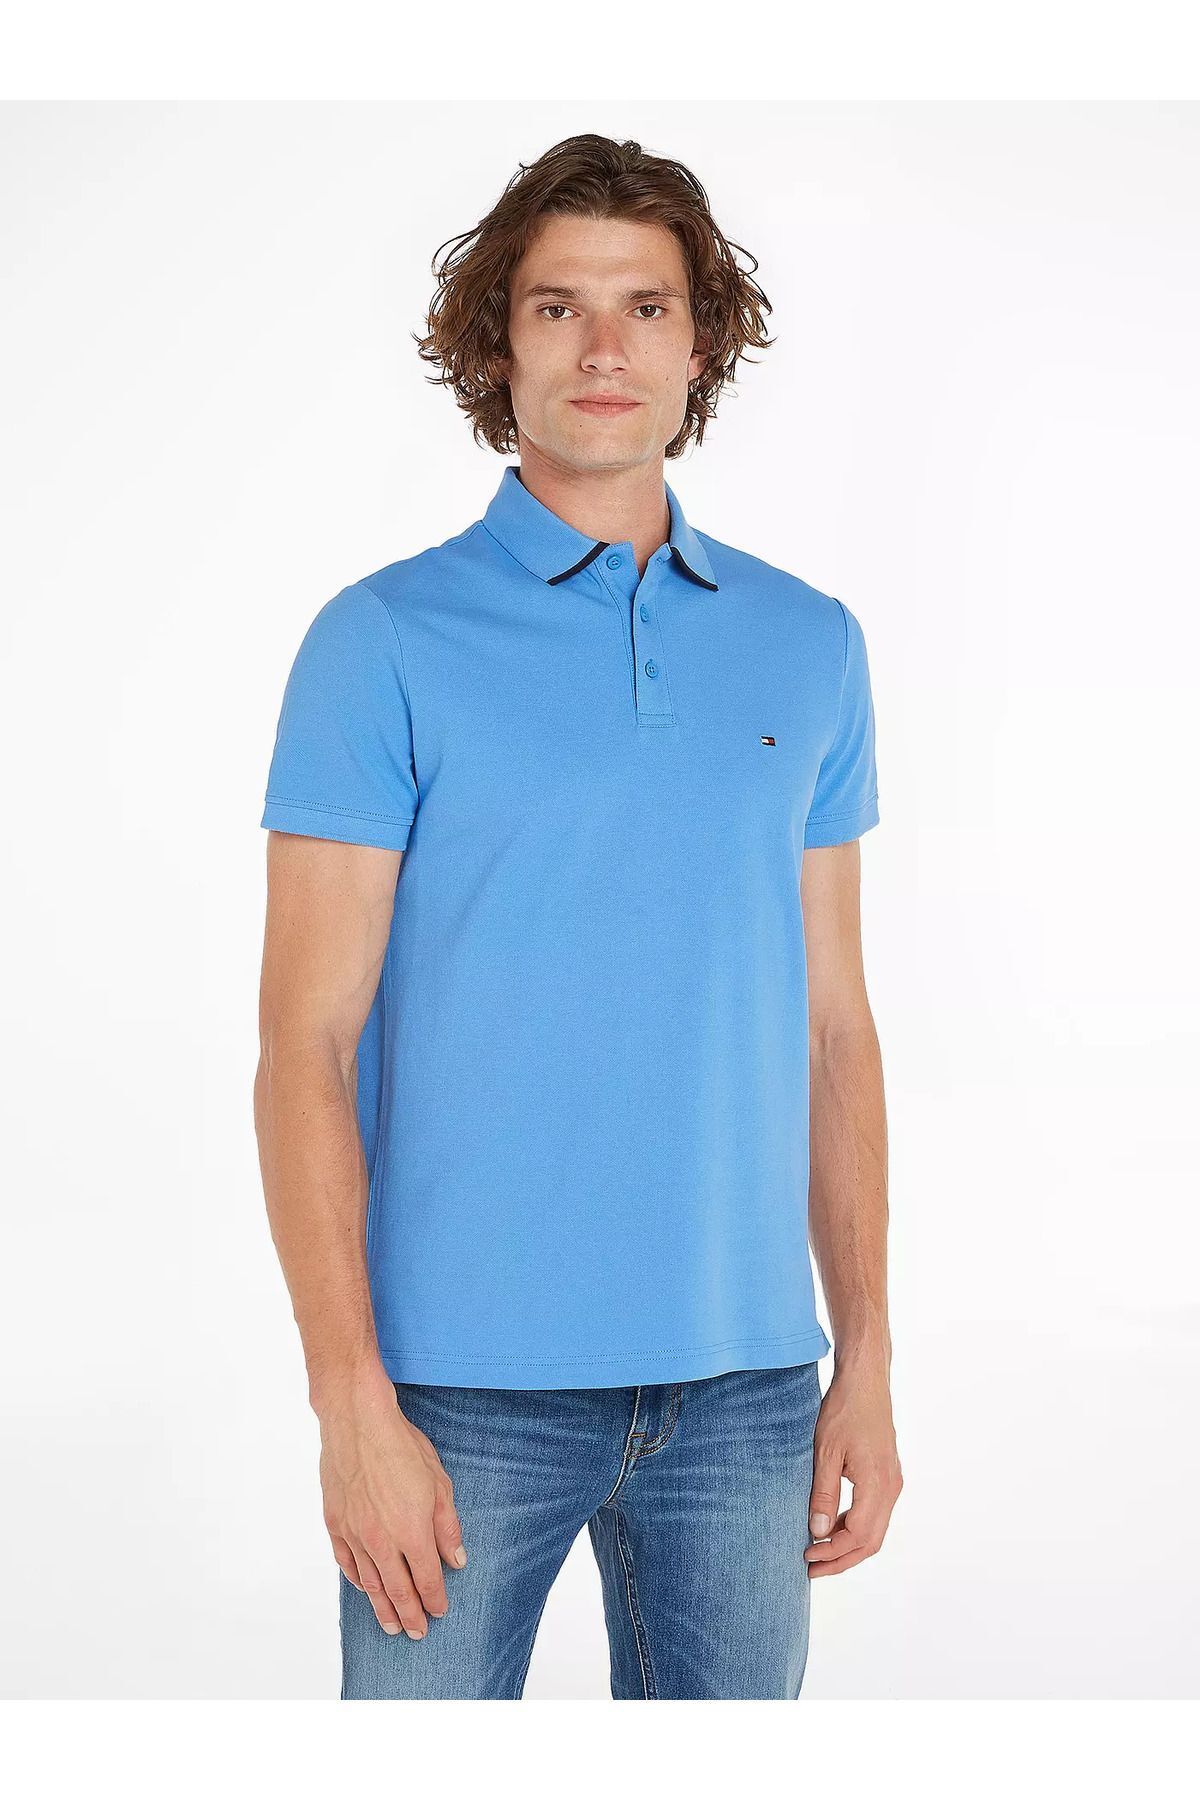 Tommy Hilfiger Erkek Logolu Polo Yakalı Kısa Kollu Düğmeli Mavi1 Polo Yaka T-Shirt MW0MW34754-C30